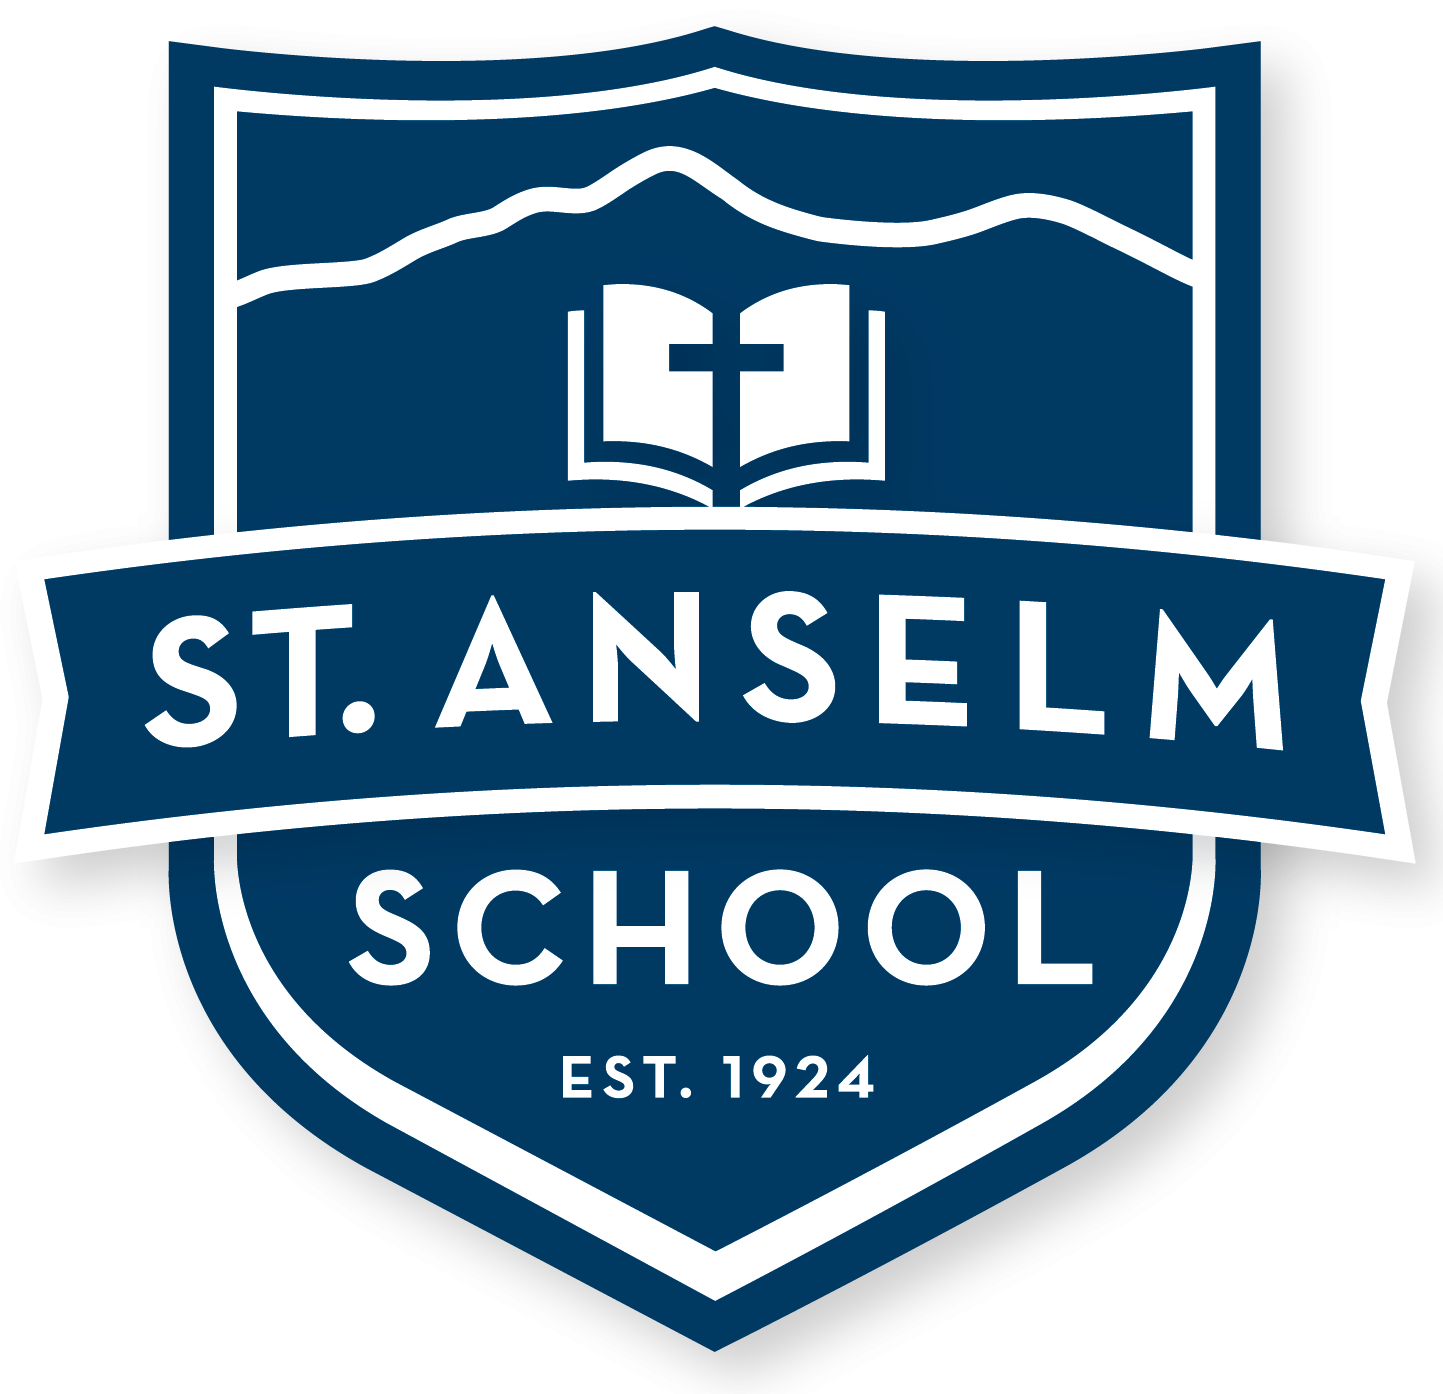 St. Anselm School